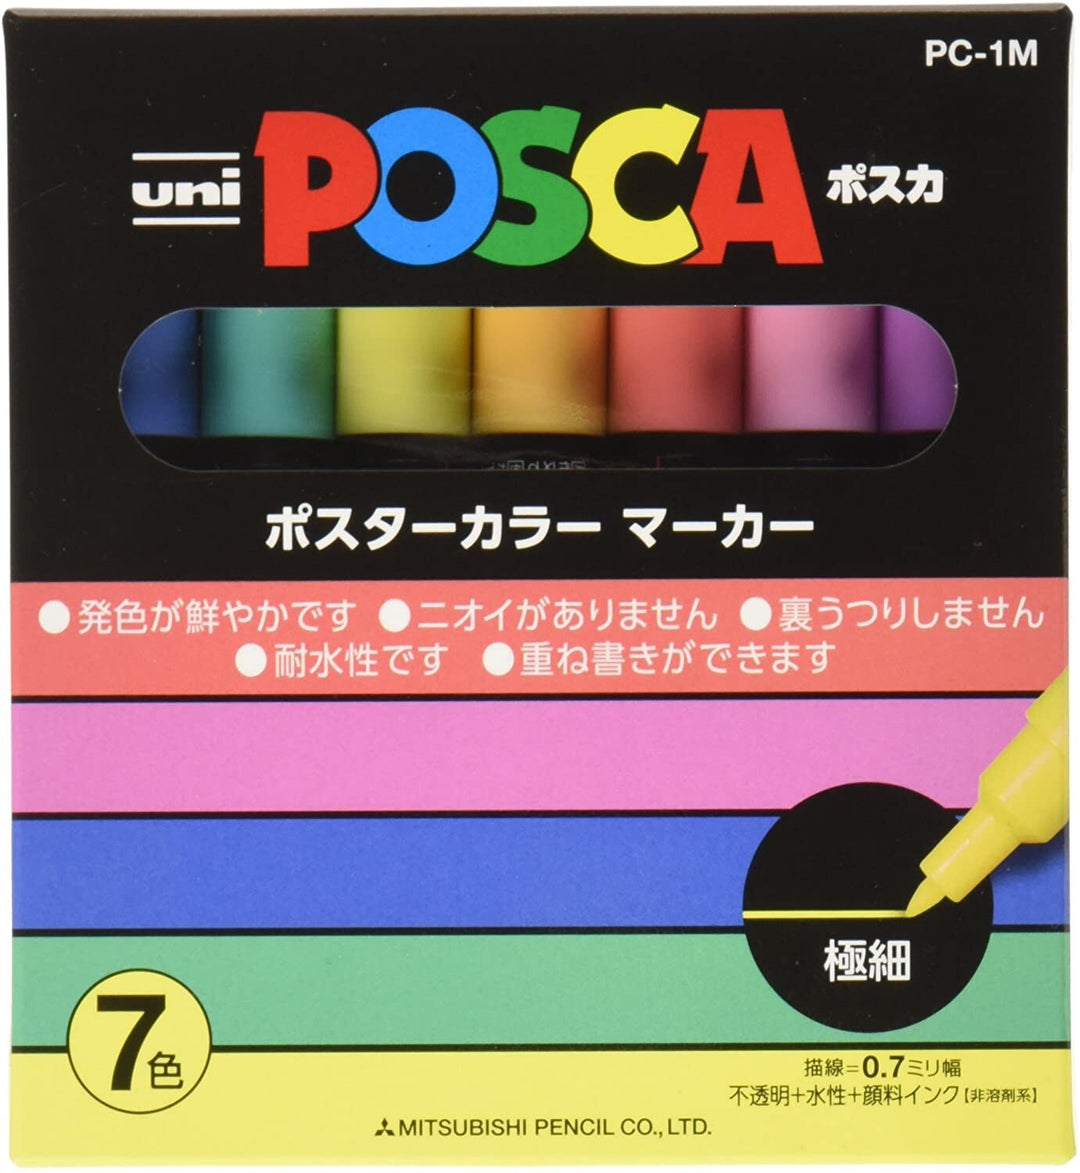 POSCA PC-1M - Ultra-Fine Paint Marker Pens - Set of 7 - Soft